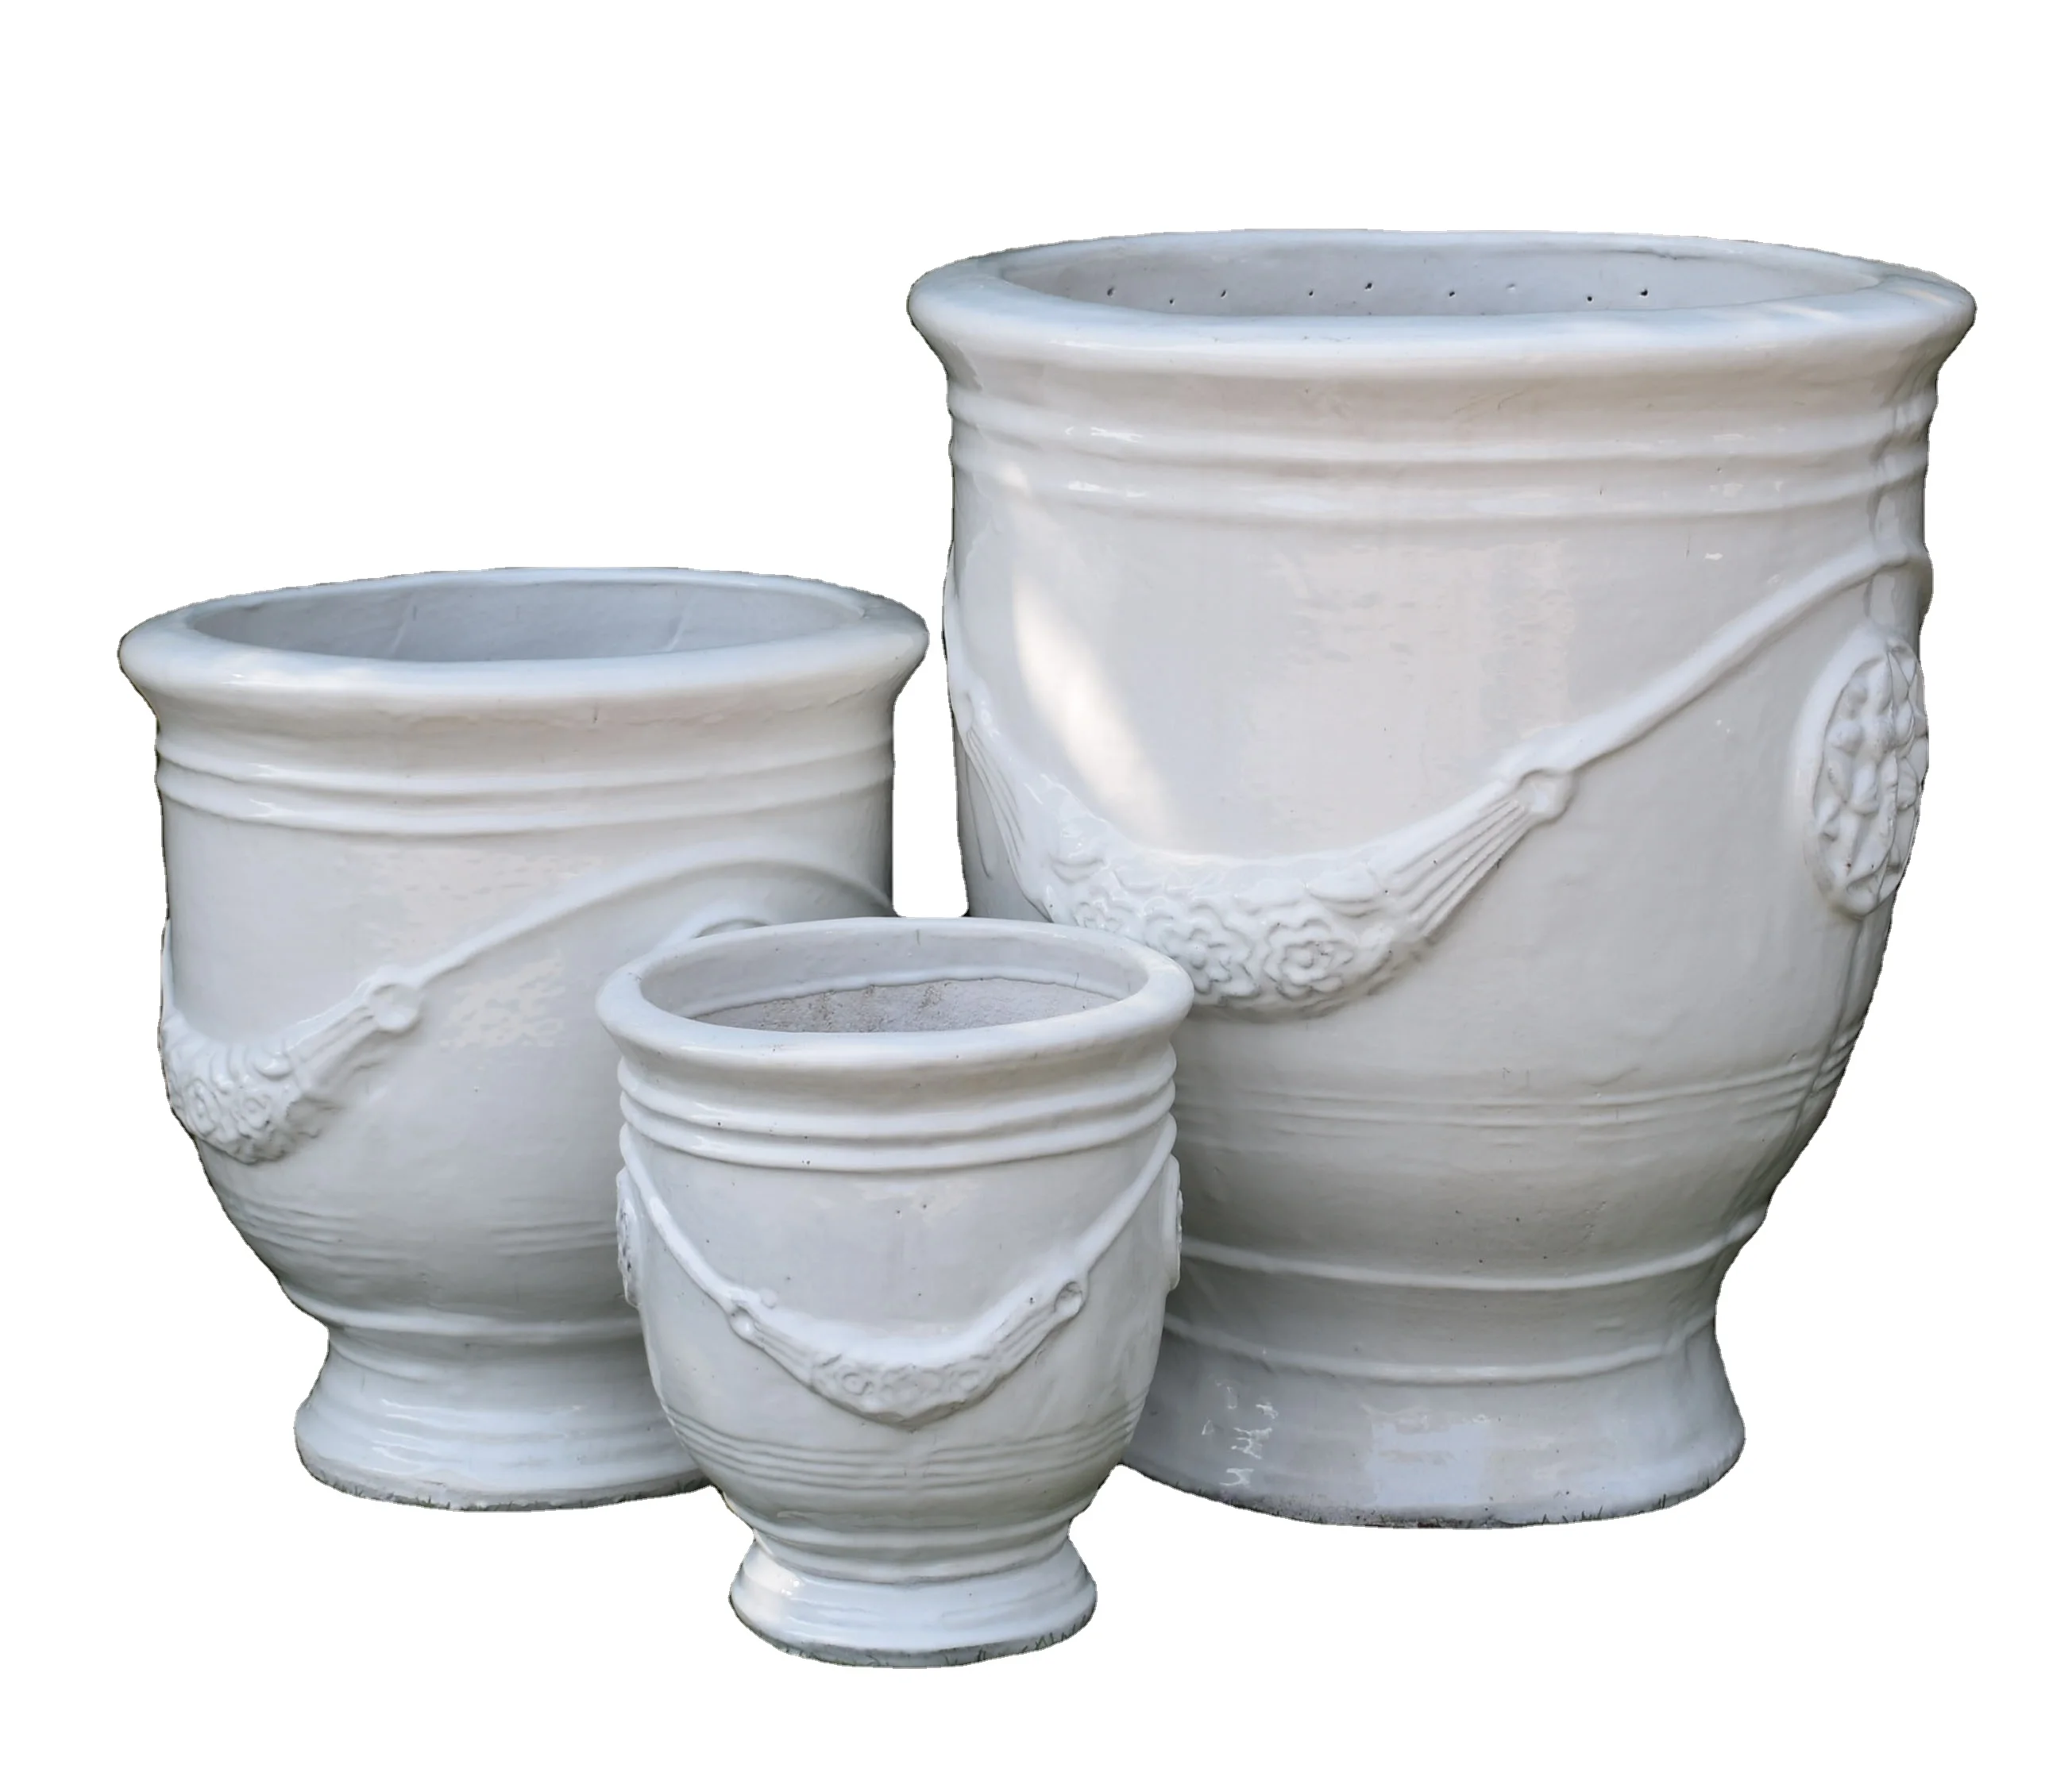 Ceramic Flower Pot Planters Big Atlantic Bonsai Pot with Flowing Glaze Outdoor Garden Home Floor Usage Design Planter Container